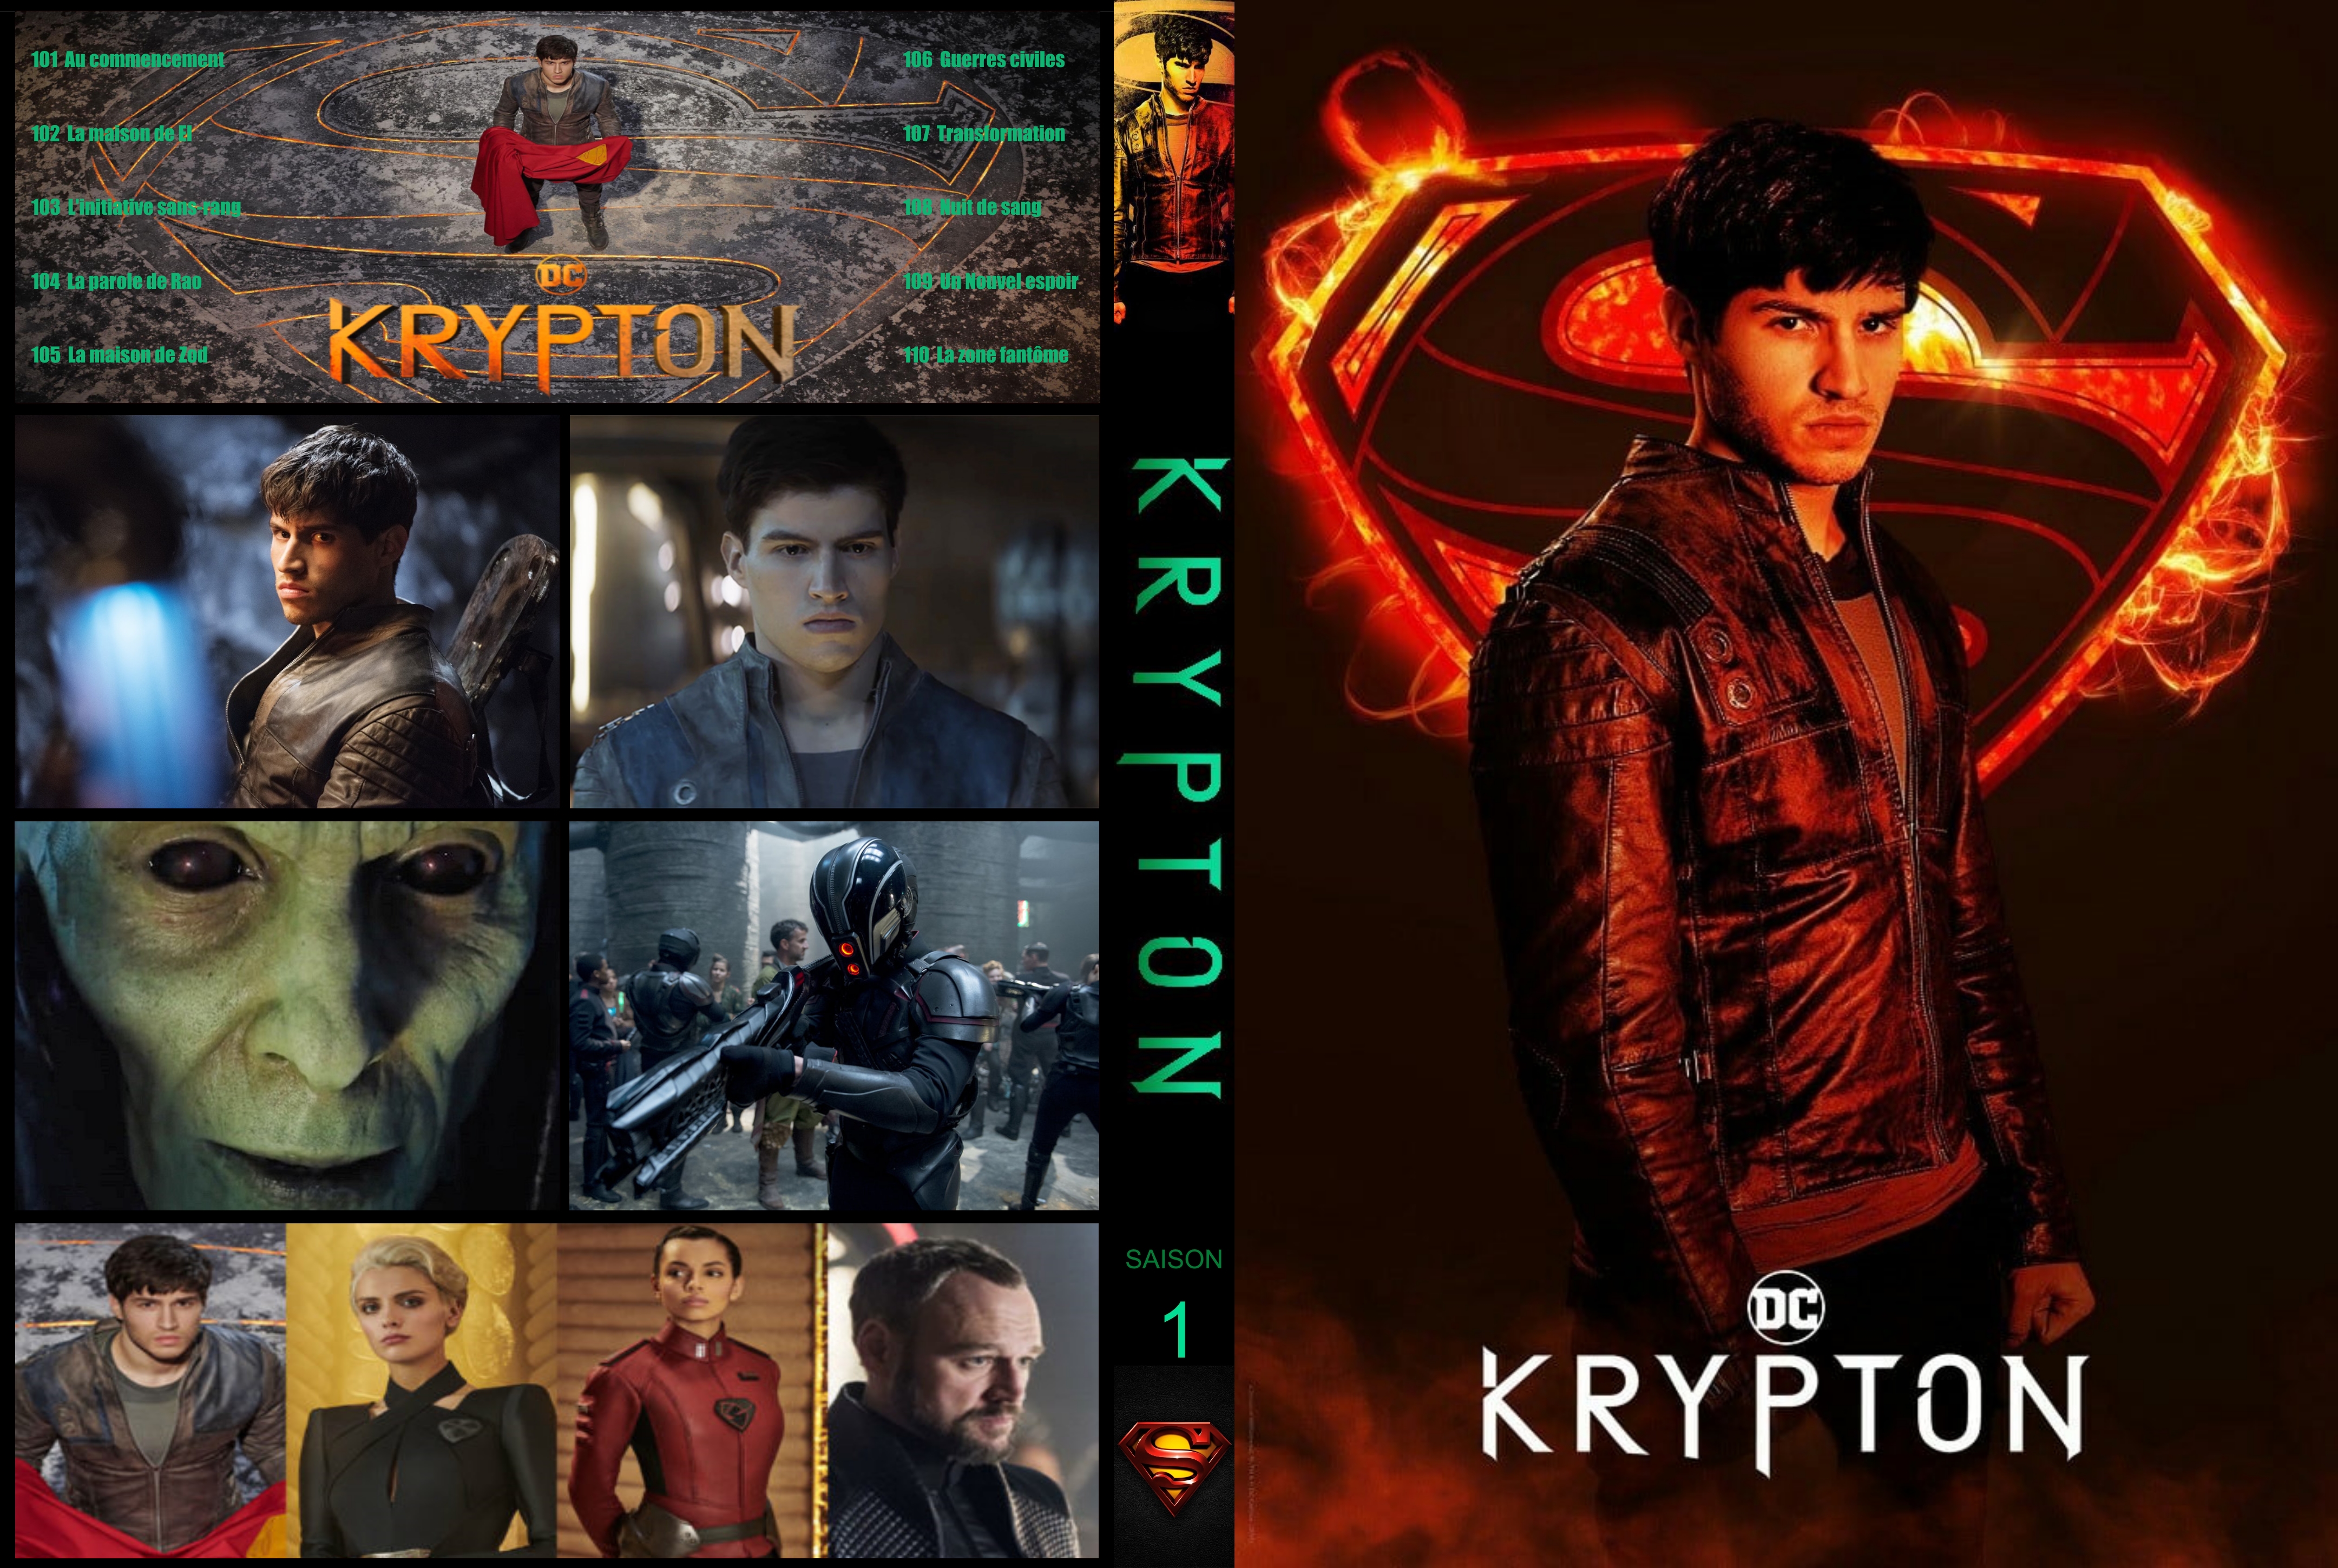 Jaquette DVD Krypton Saison 1 custom